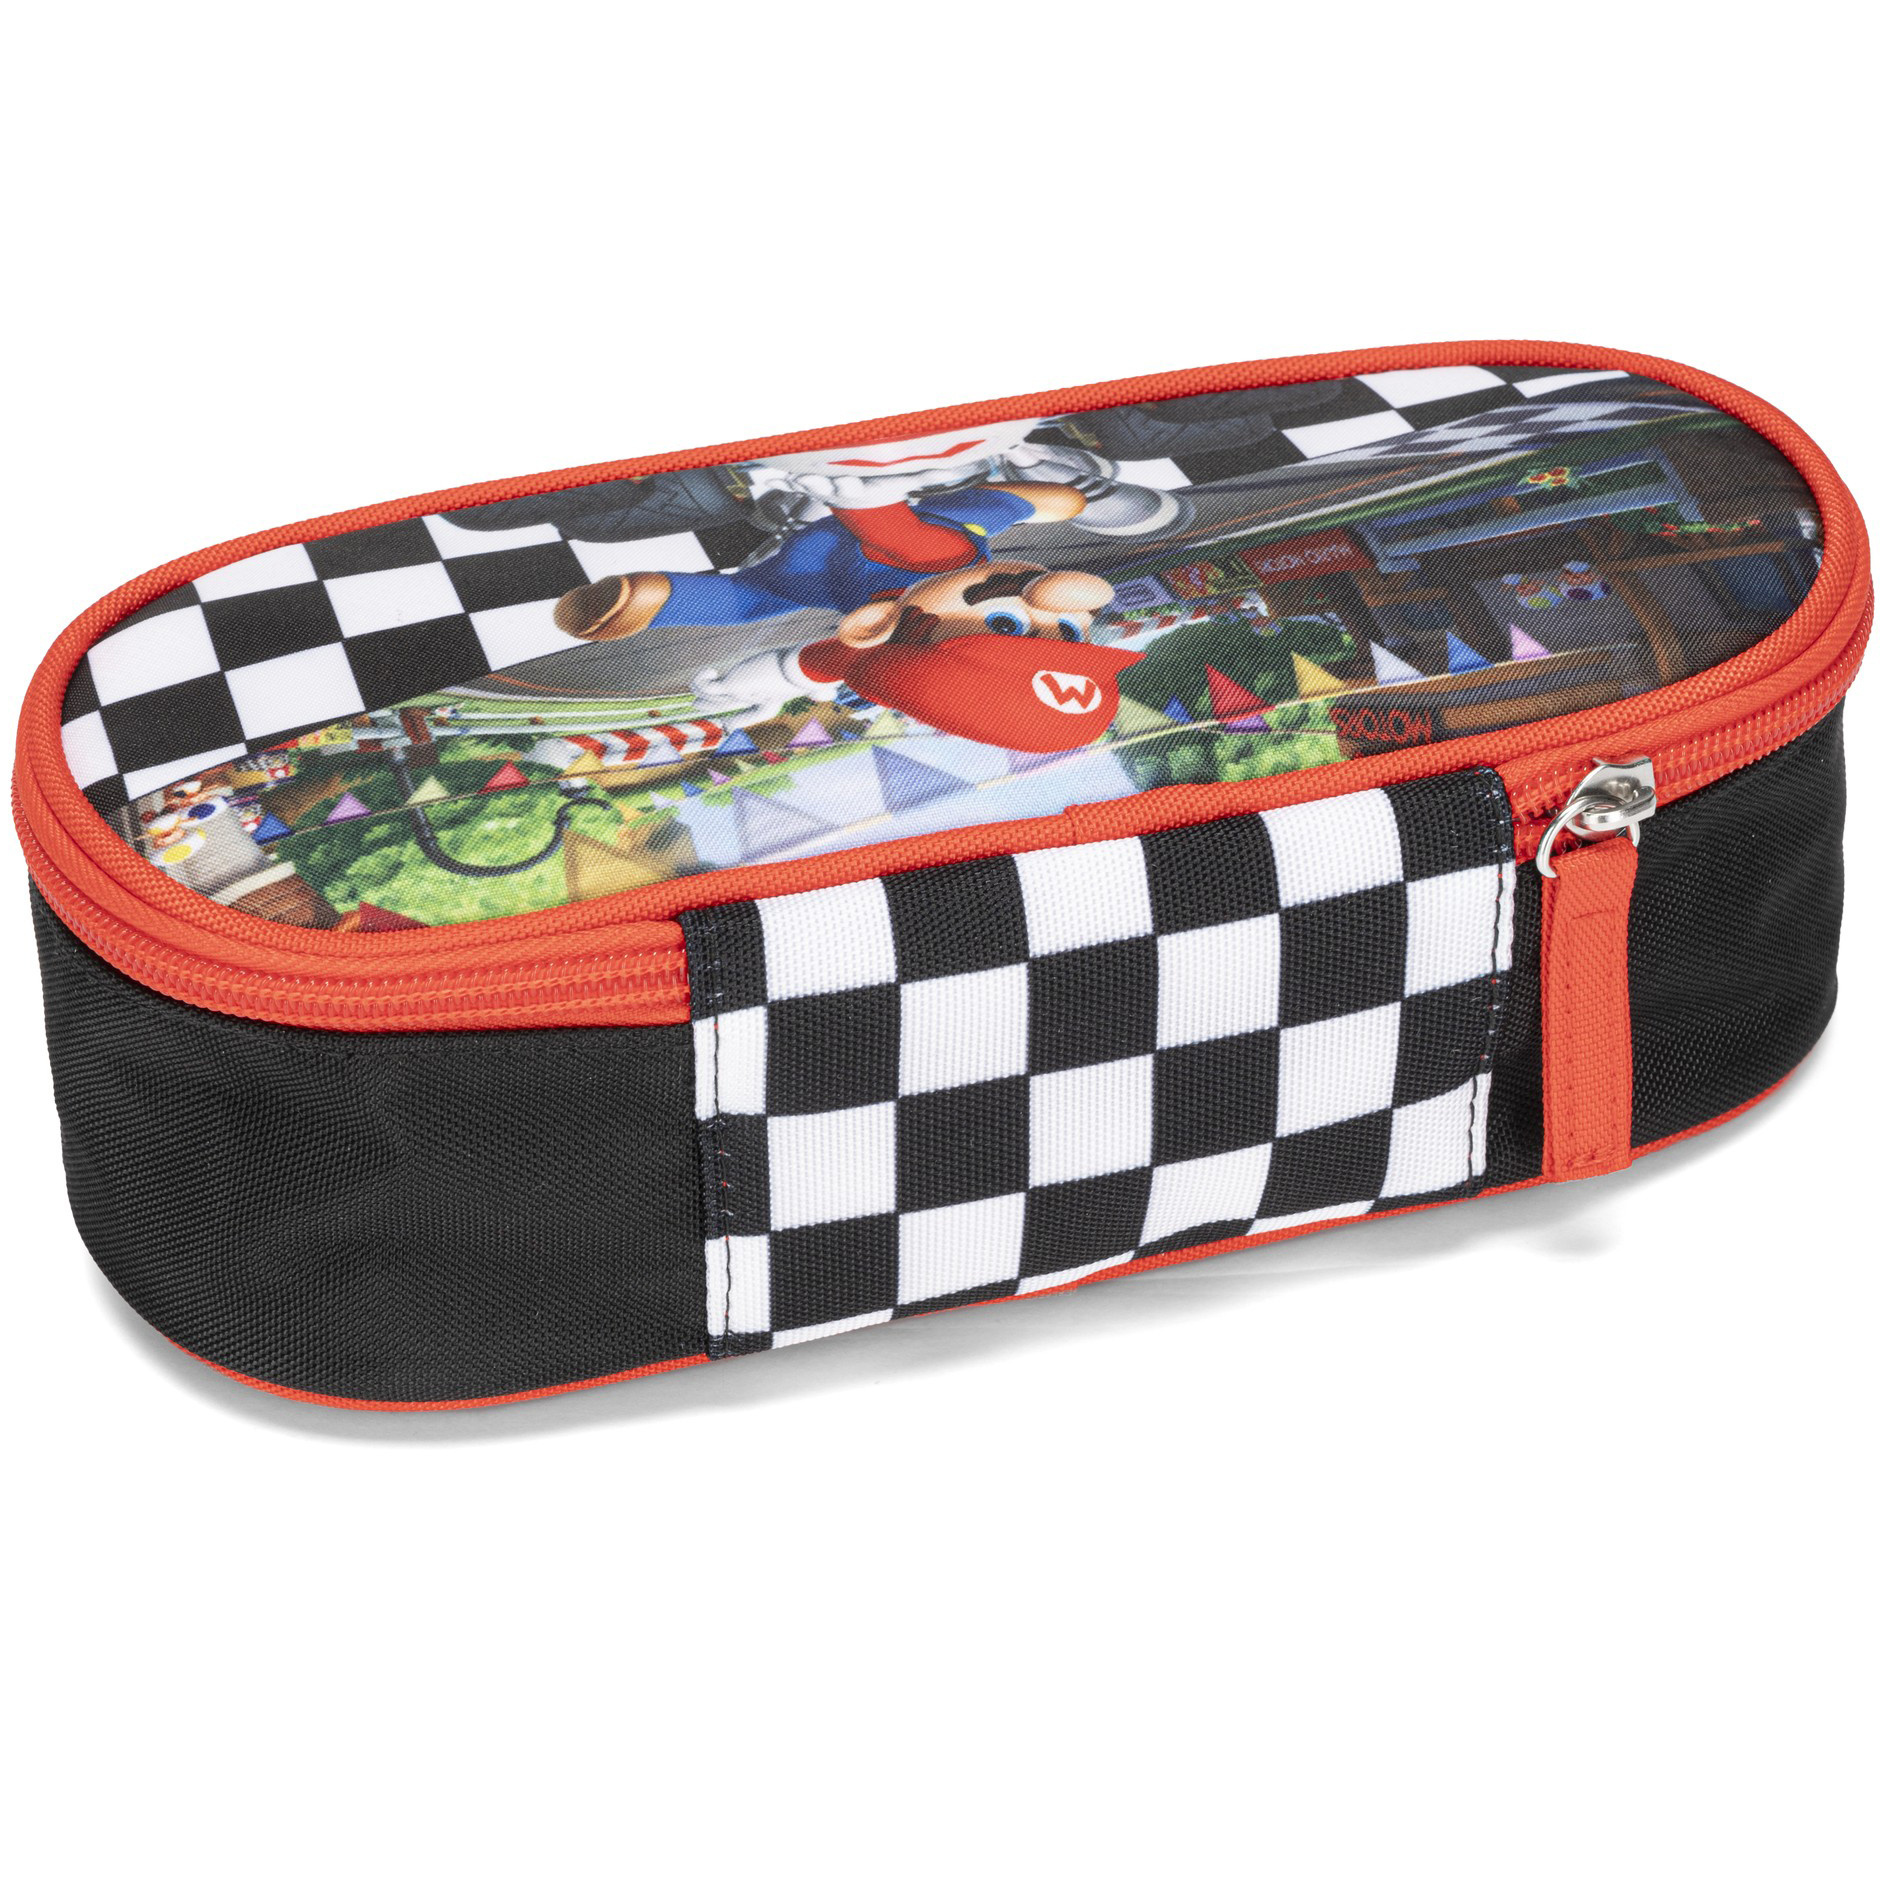 Super Mario Pouch Oval Mario Kart - 23 x 6 x 9.5 cm - Polyester